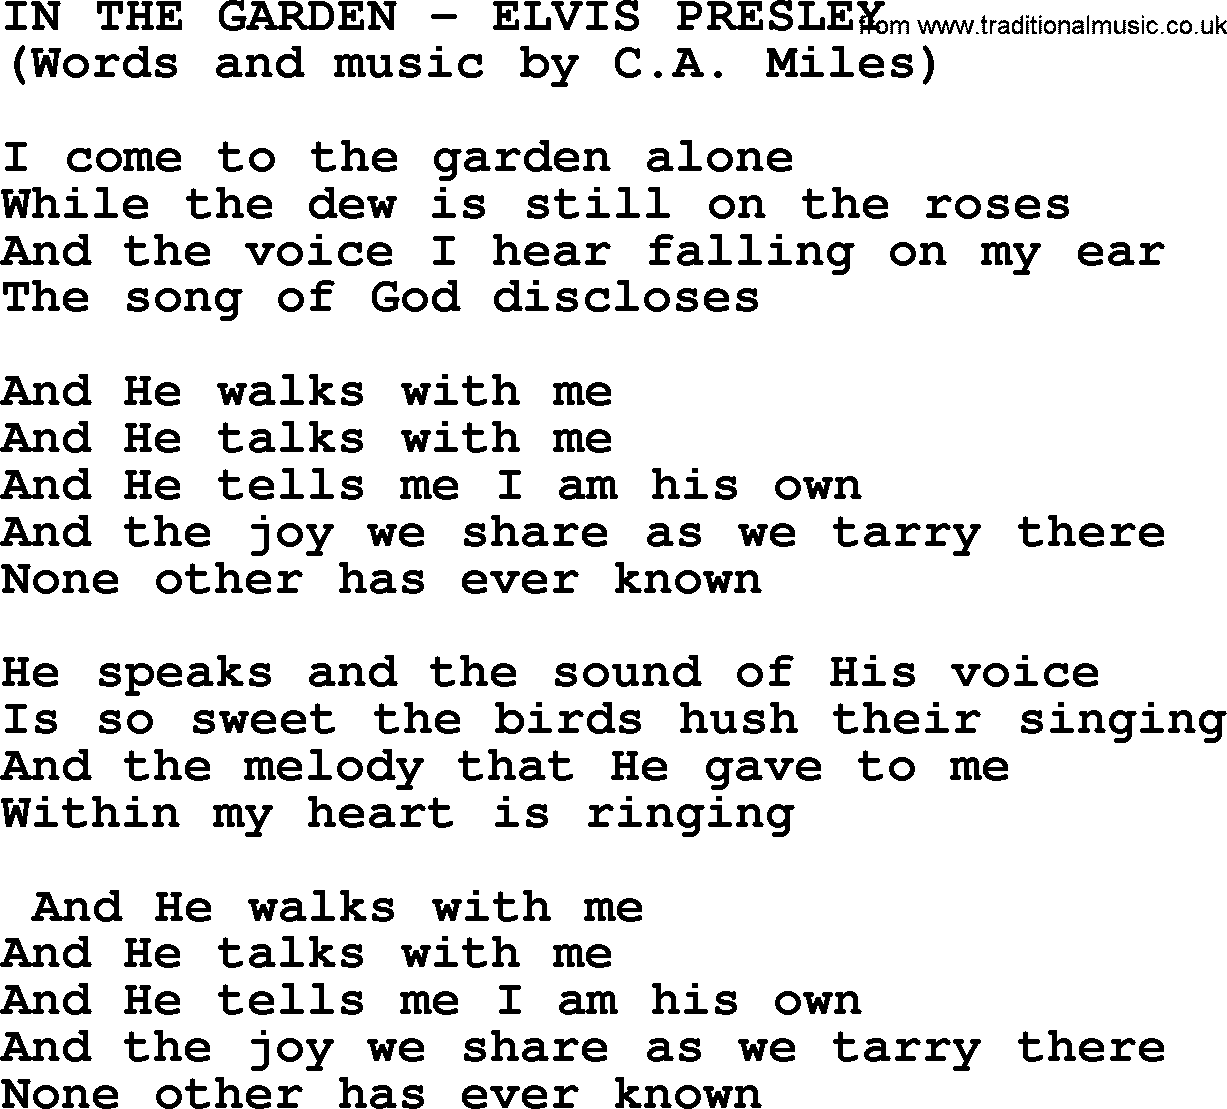 In The Garden By Elvis Presley - Lyrics